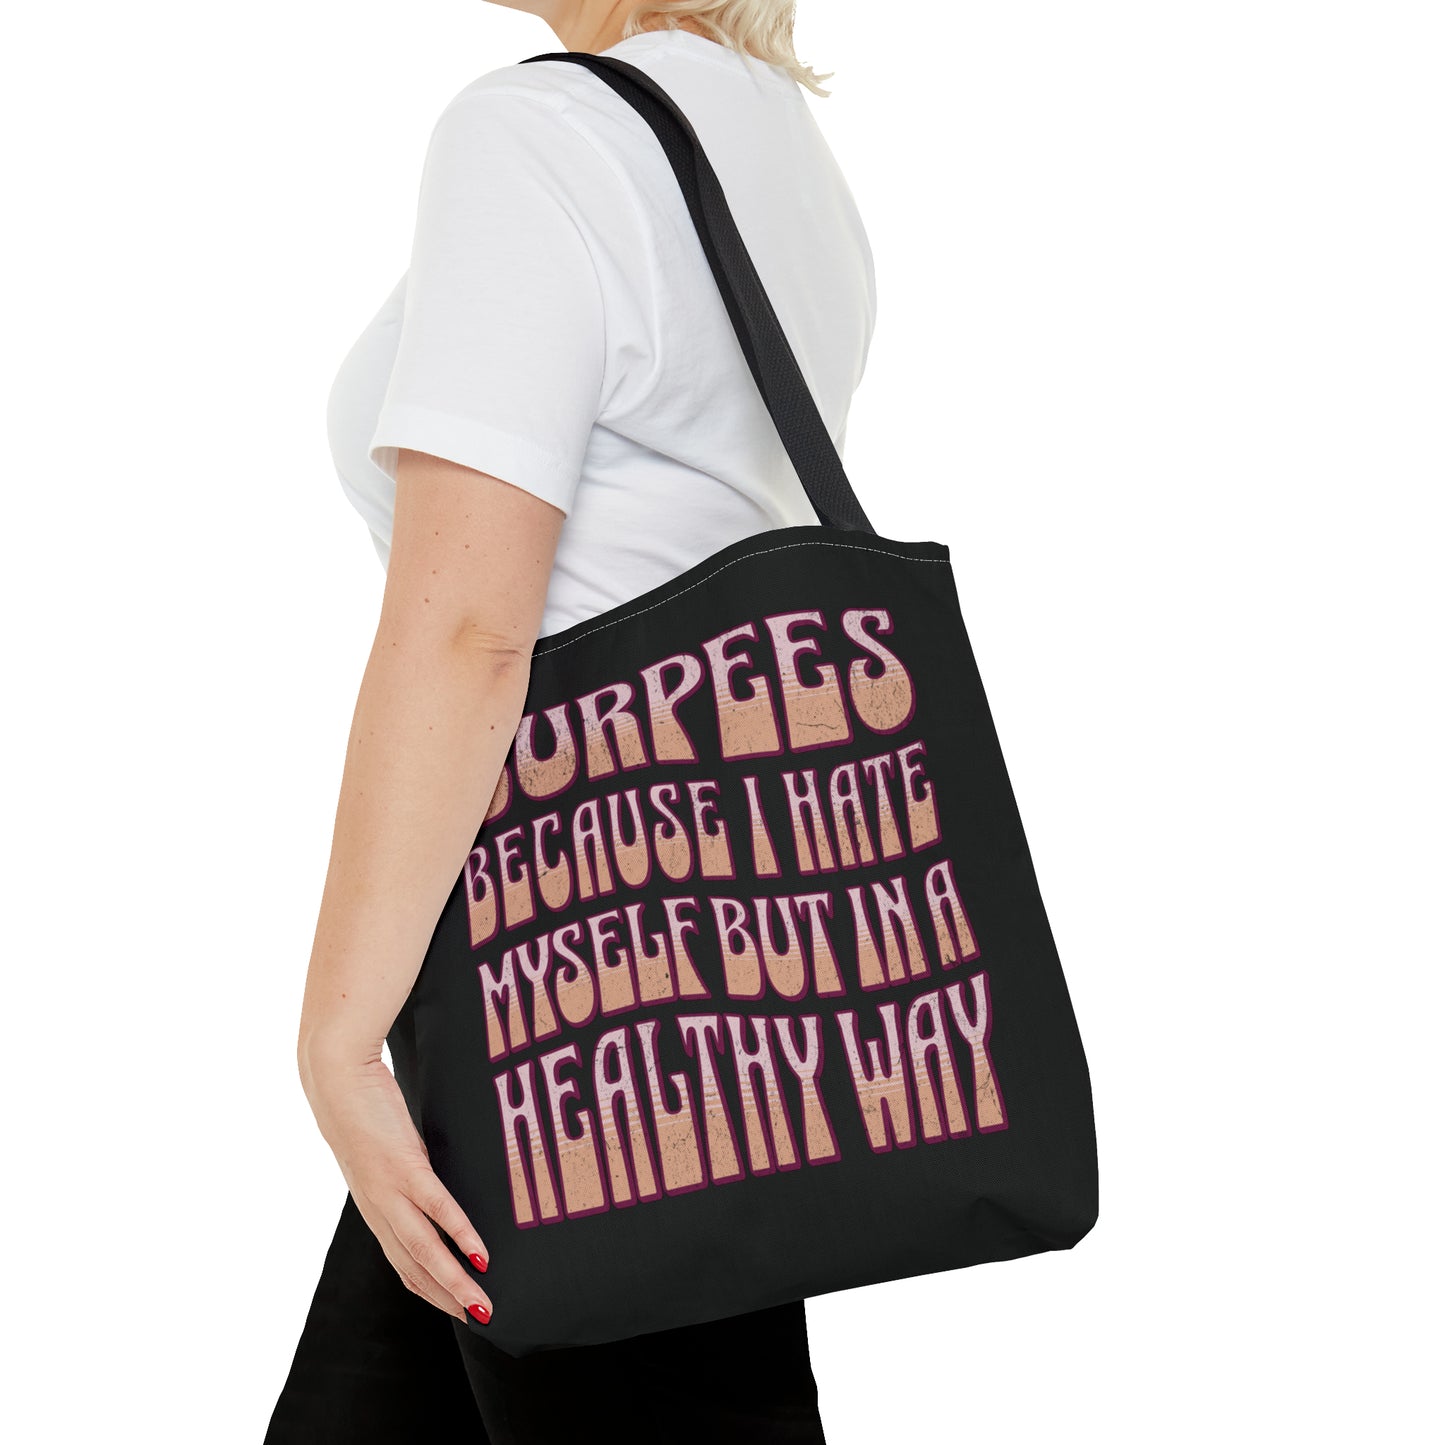 "Burpees" - Tote Bag